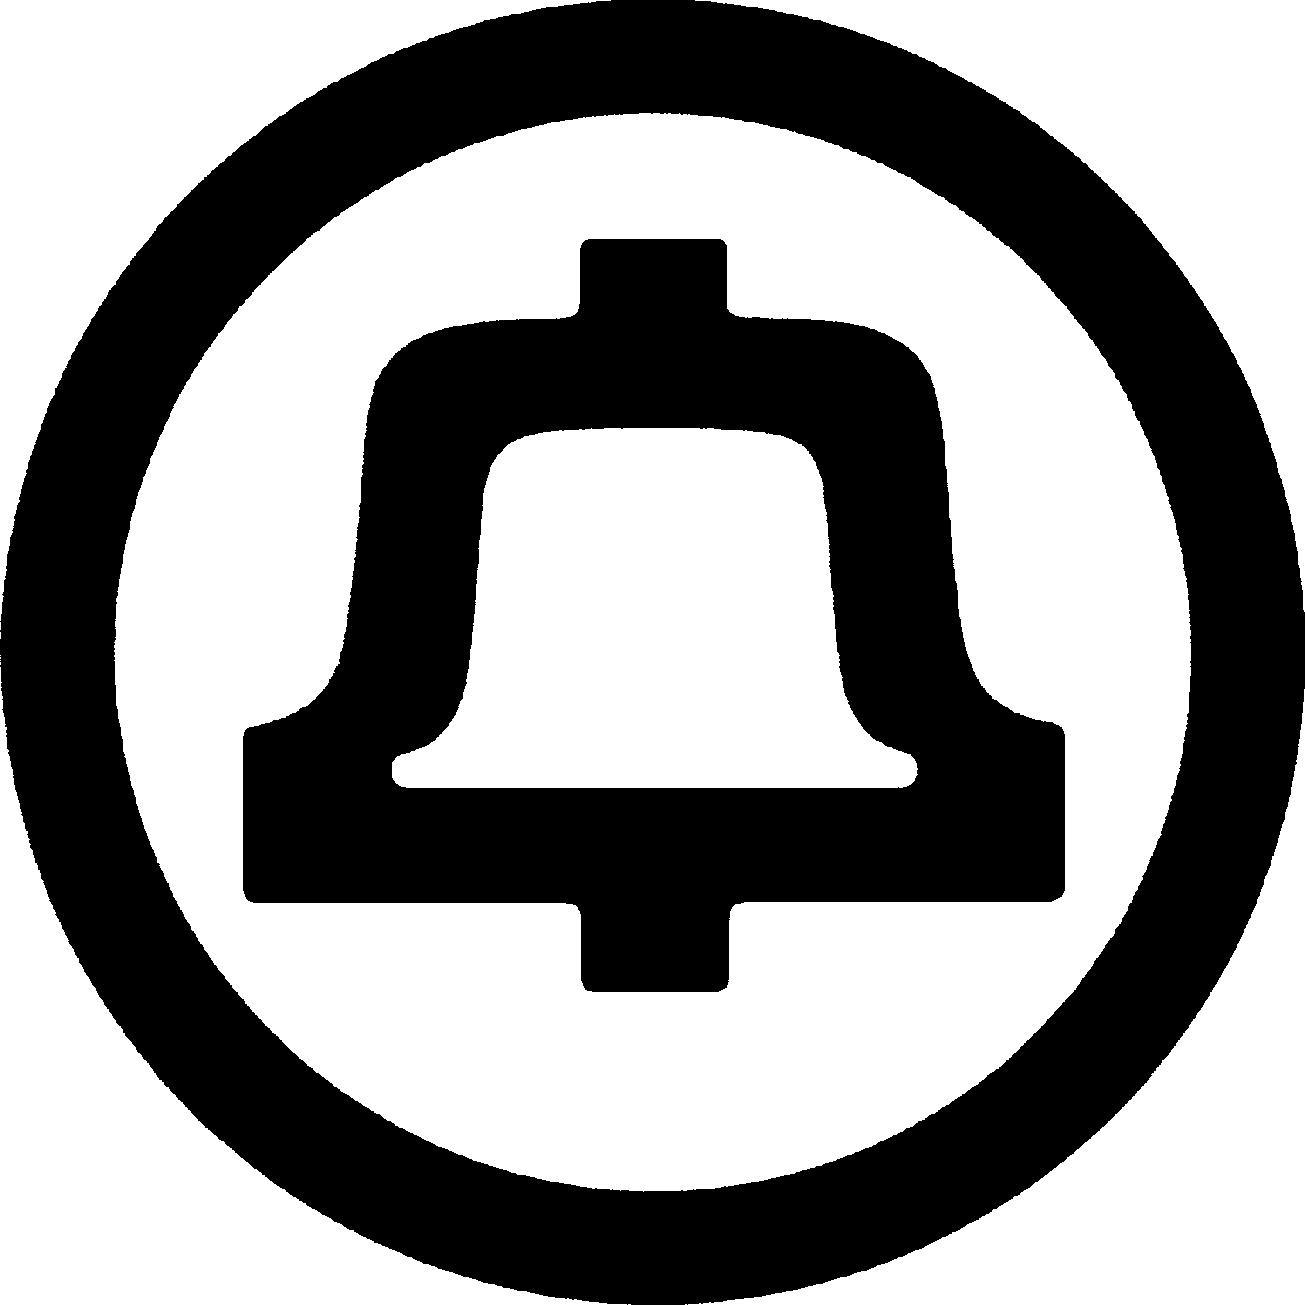 Black Bell Logo - Image - Bell logo 1969.png | Logopedia | FANDOM powered by Wikia